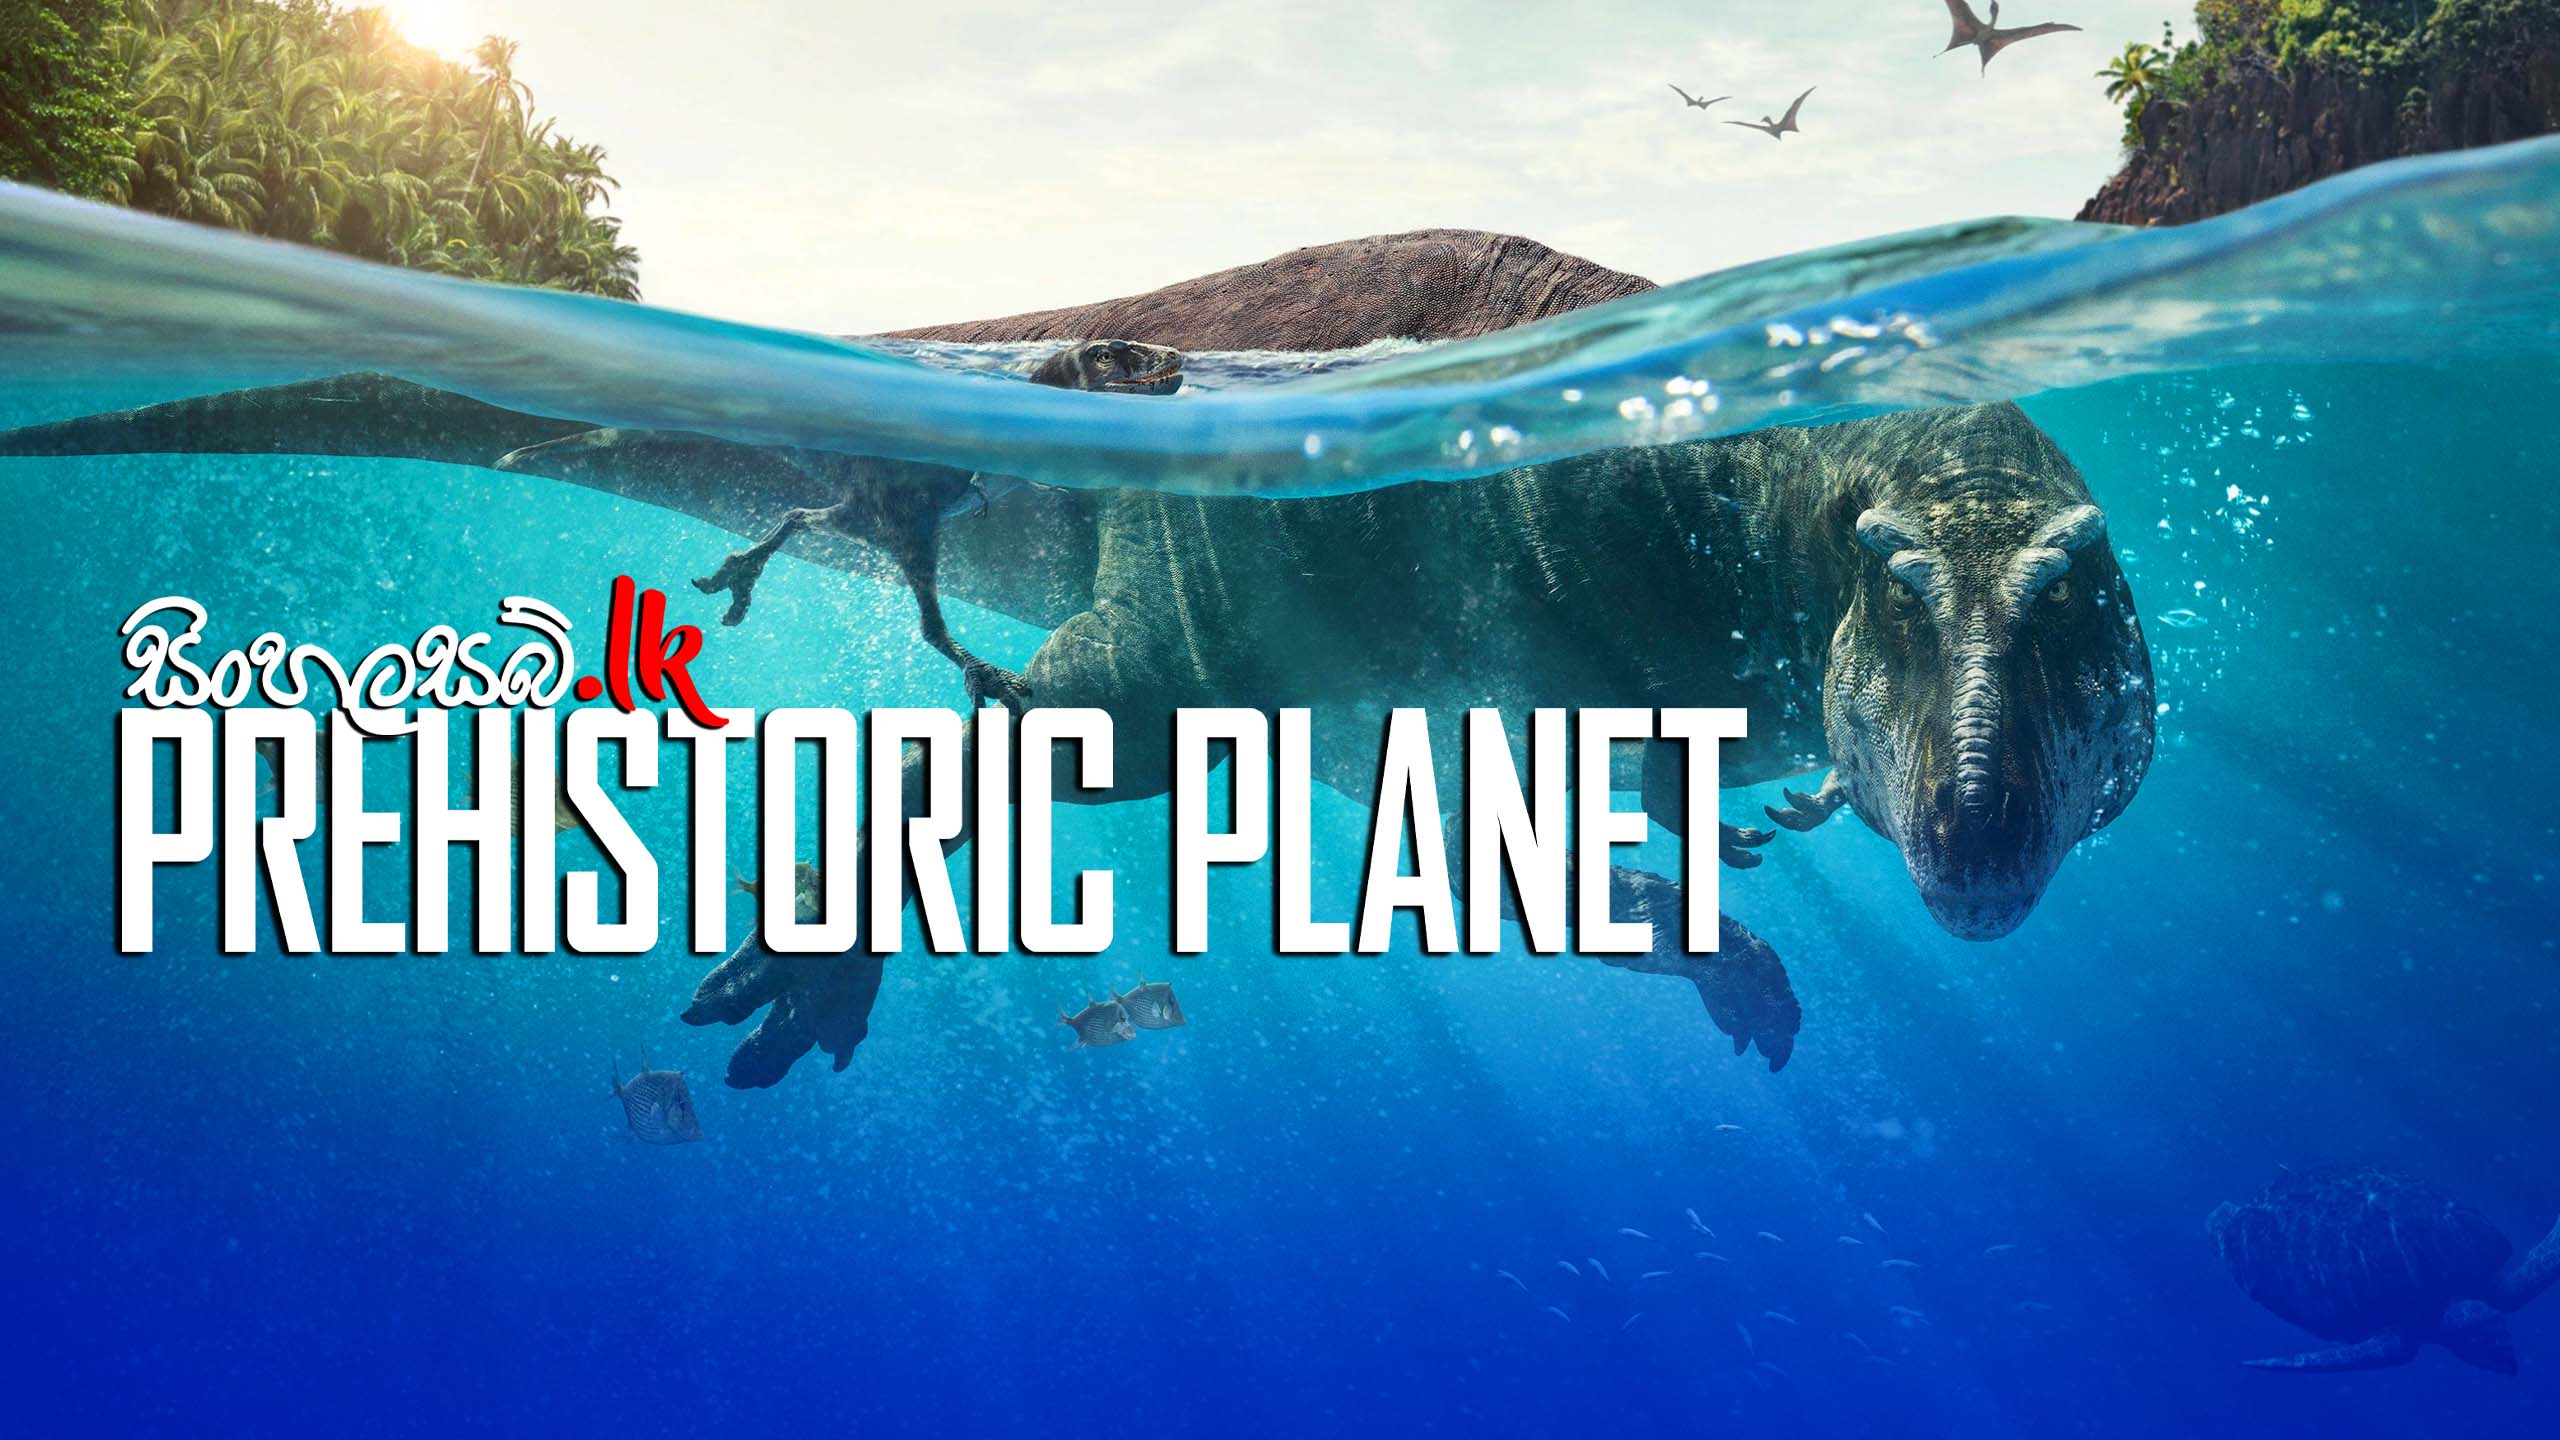 Prehistoric Planet (2022) Sinhala Subtitles | සිංහල උපසිරසි සමඟ